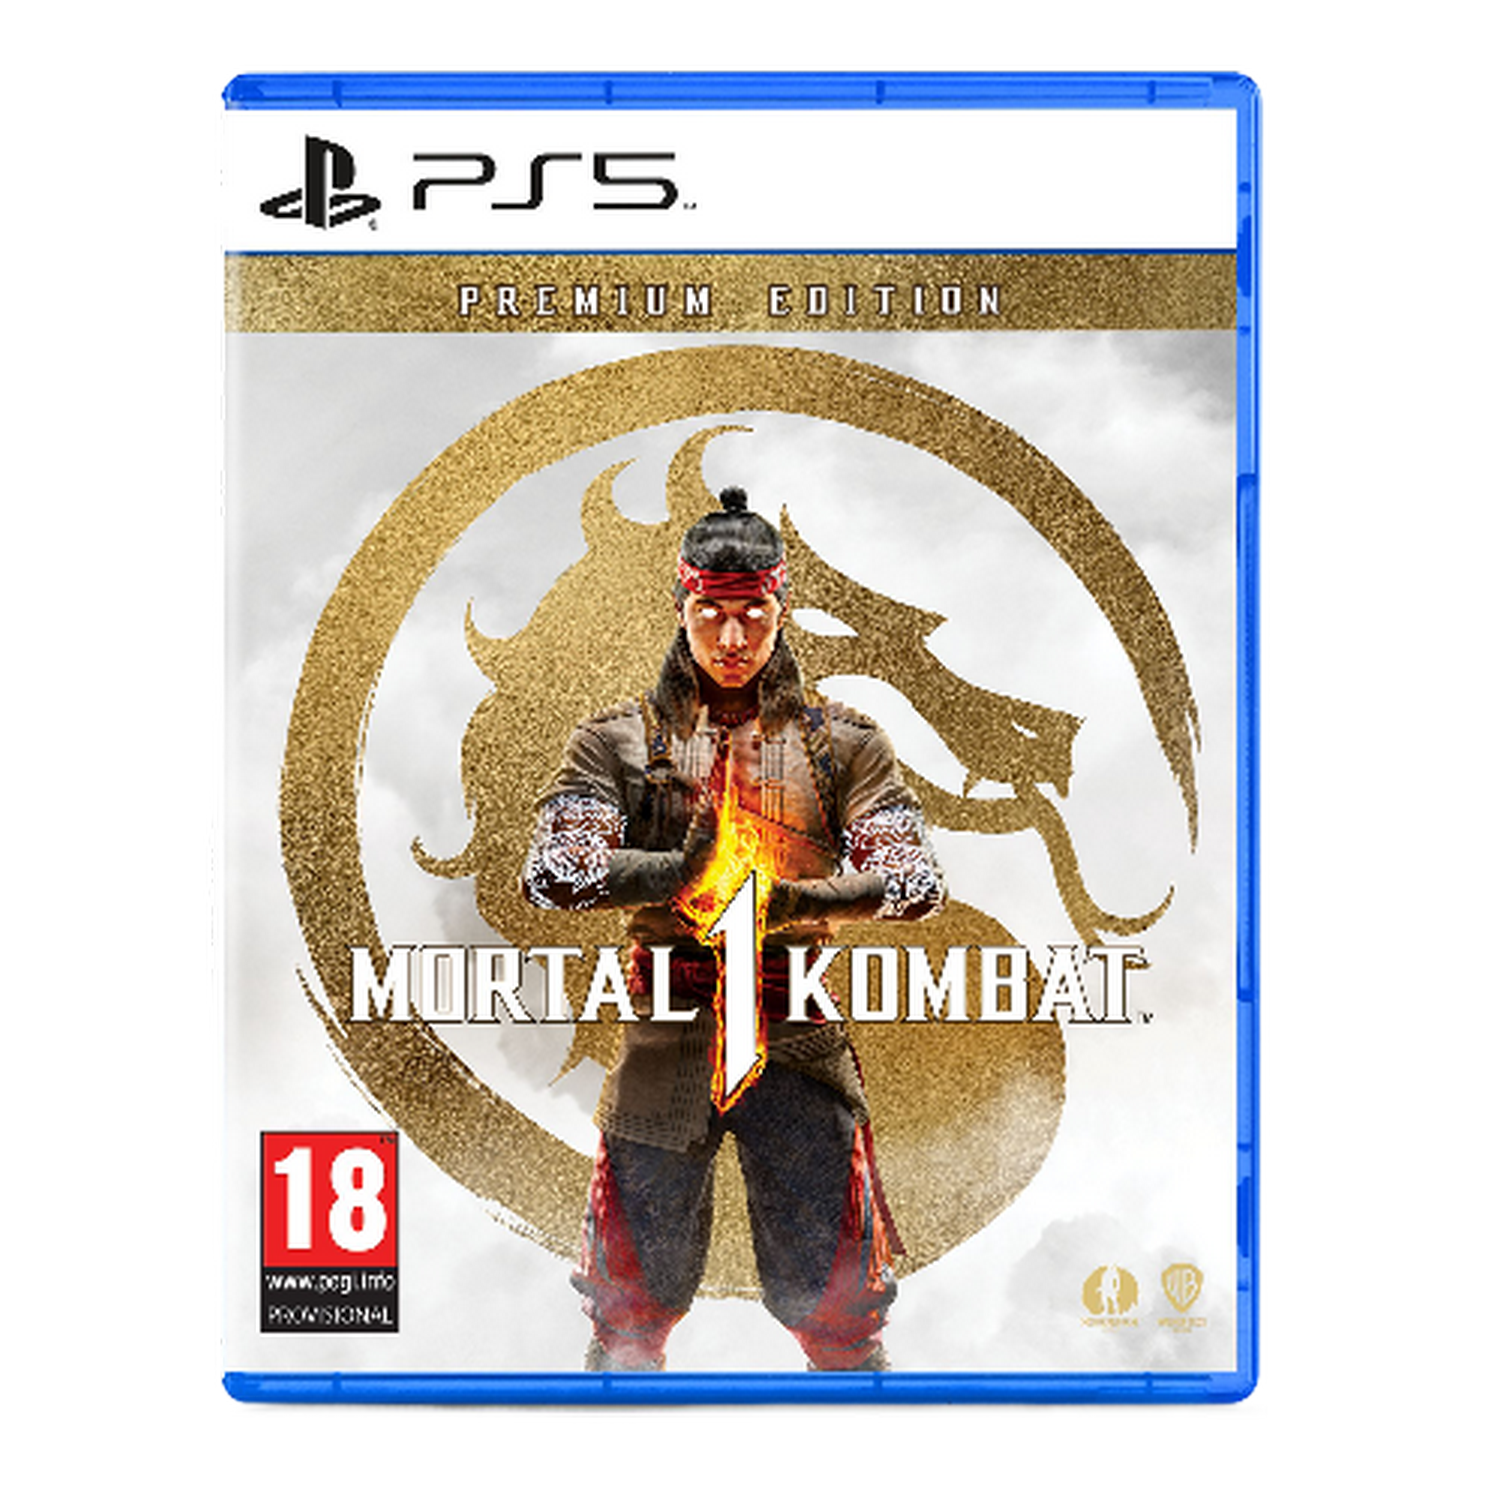 Mortal Kombat 1 - Premium Edition - PS5